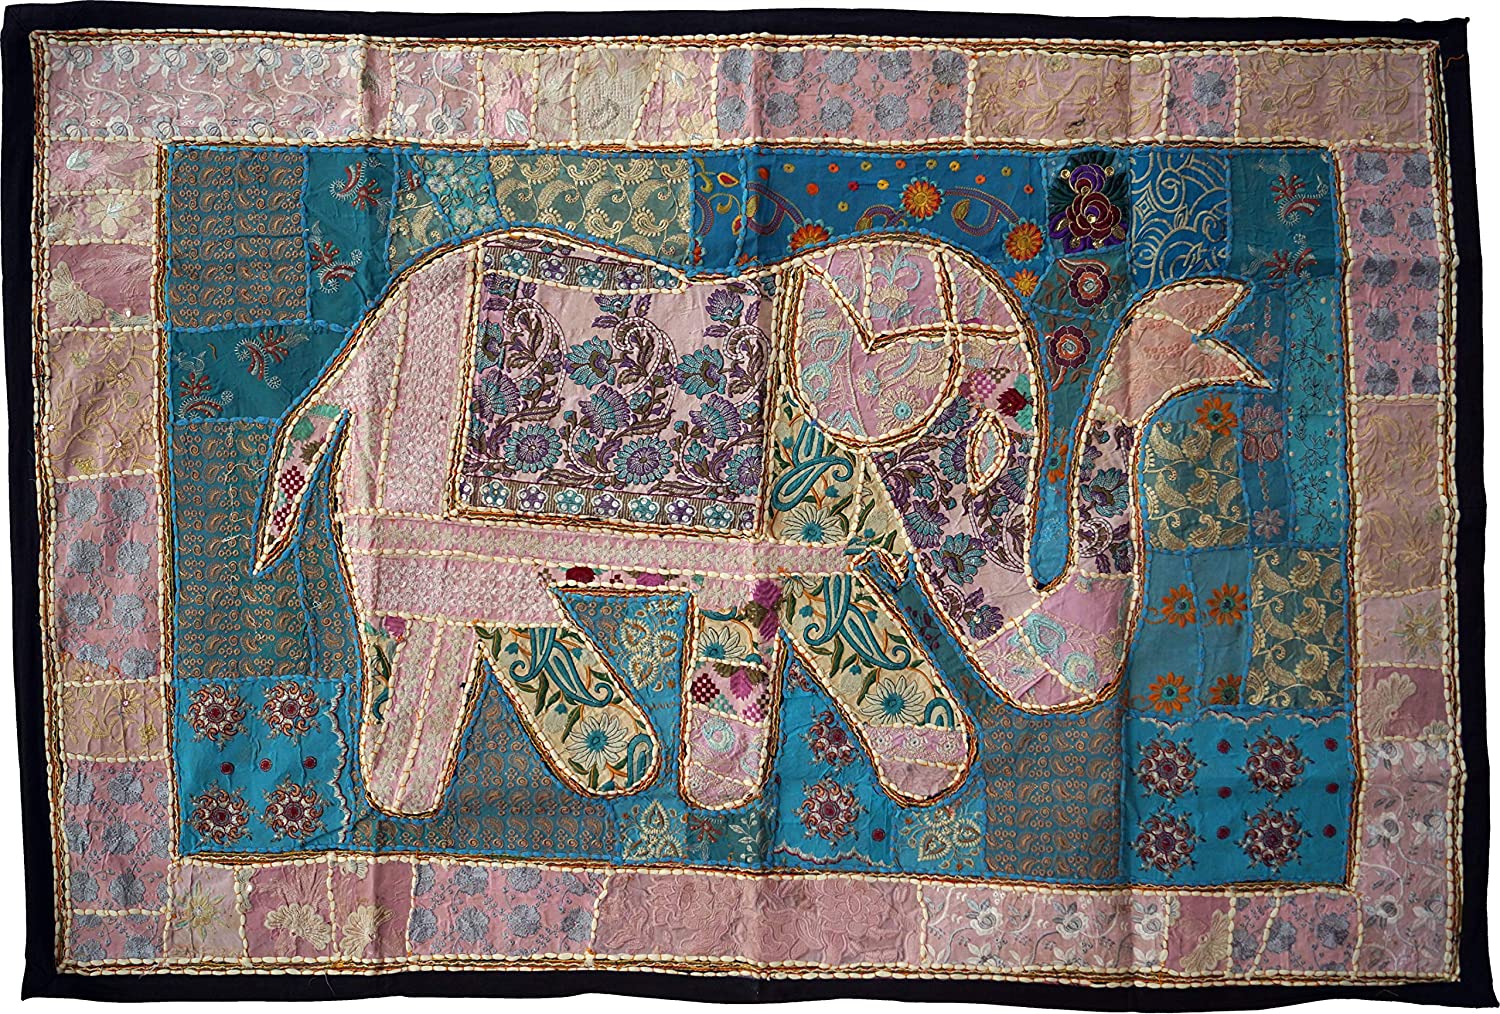 Guru-Shop Indian Tapestry Patchwork Wall Hanging 150 X 100 Cm-Pattern 1, Wa